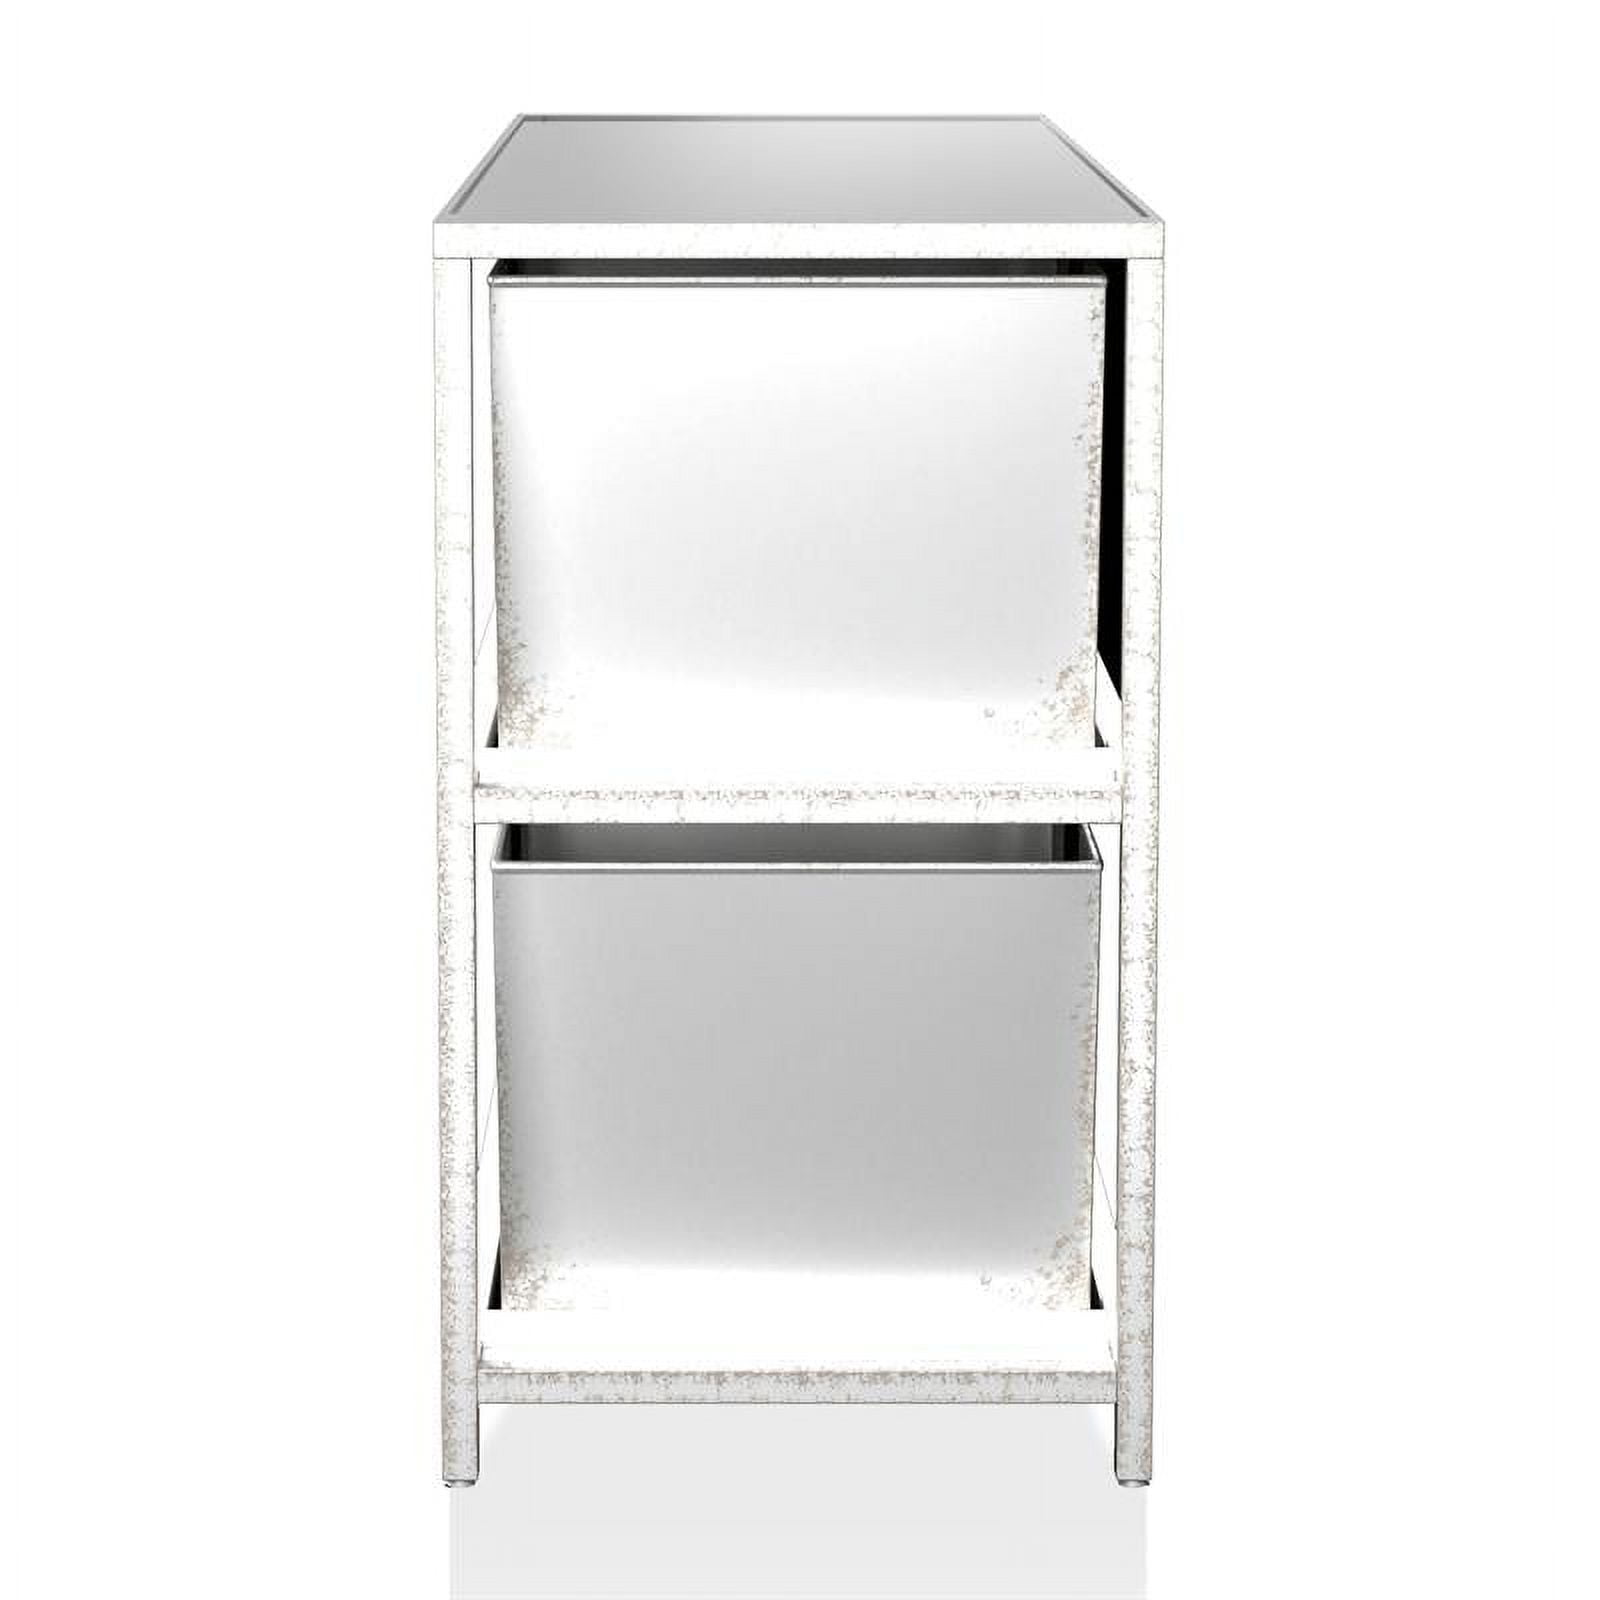 Copern Industrial 44-inch Metal 6-Bin Storage Shelf by Furniture of America  - On Sale - Bed Bath & Beyond - 15289762